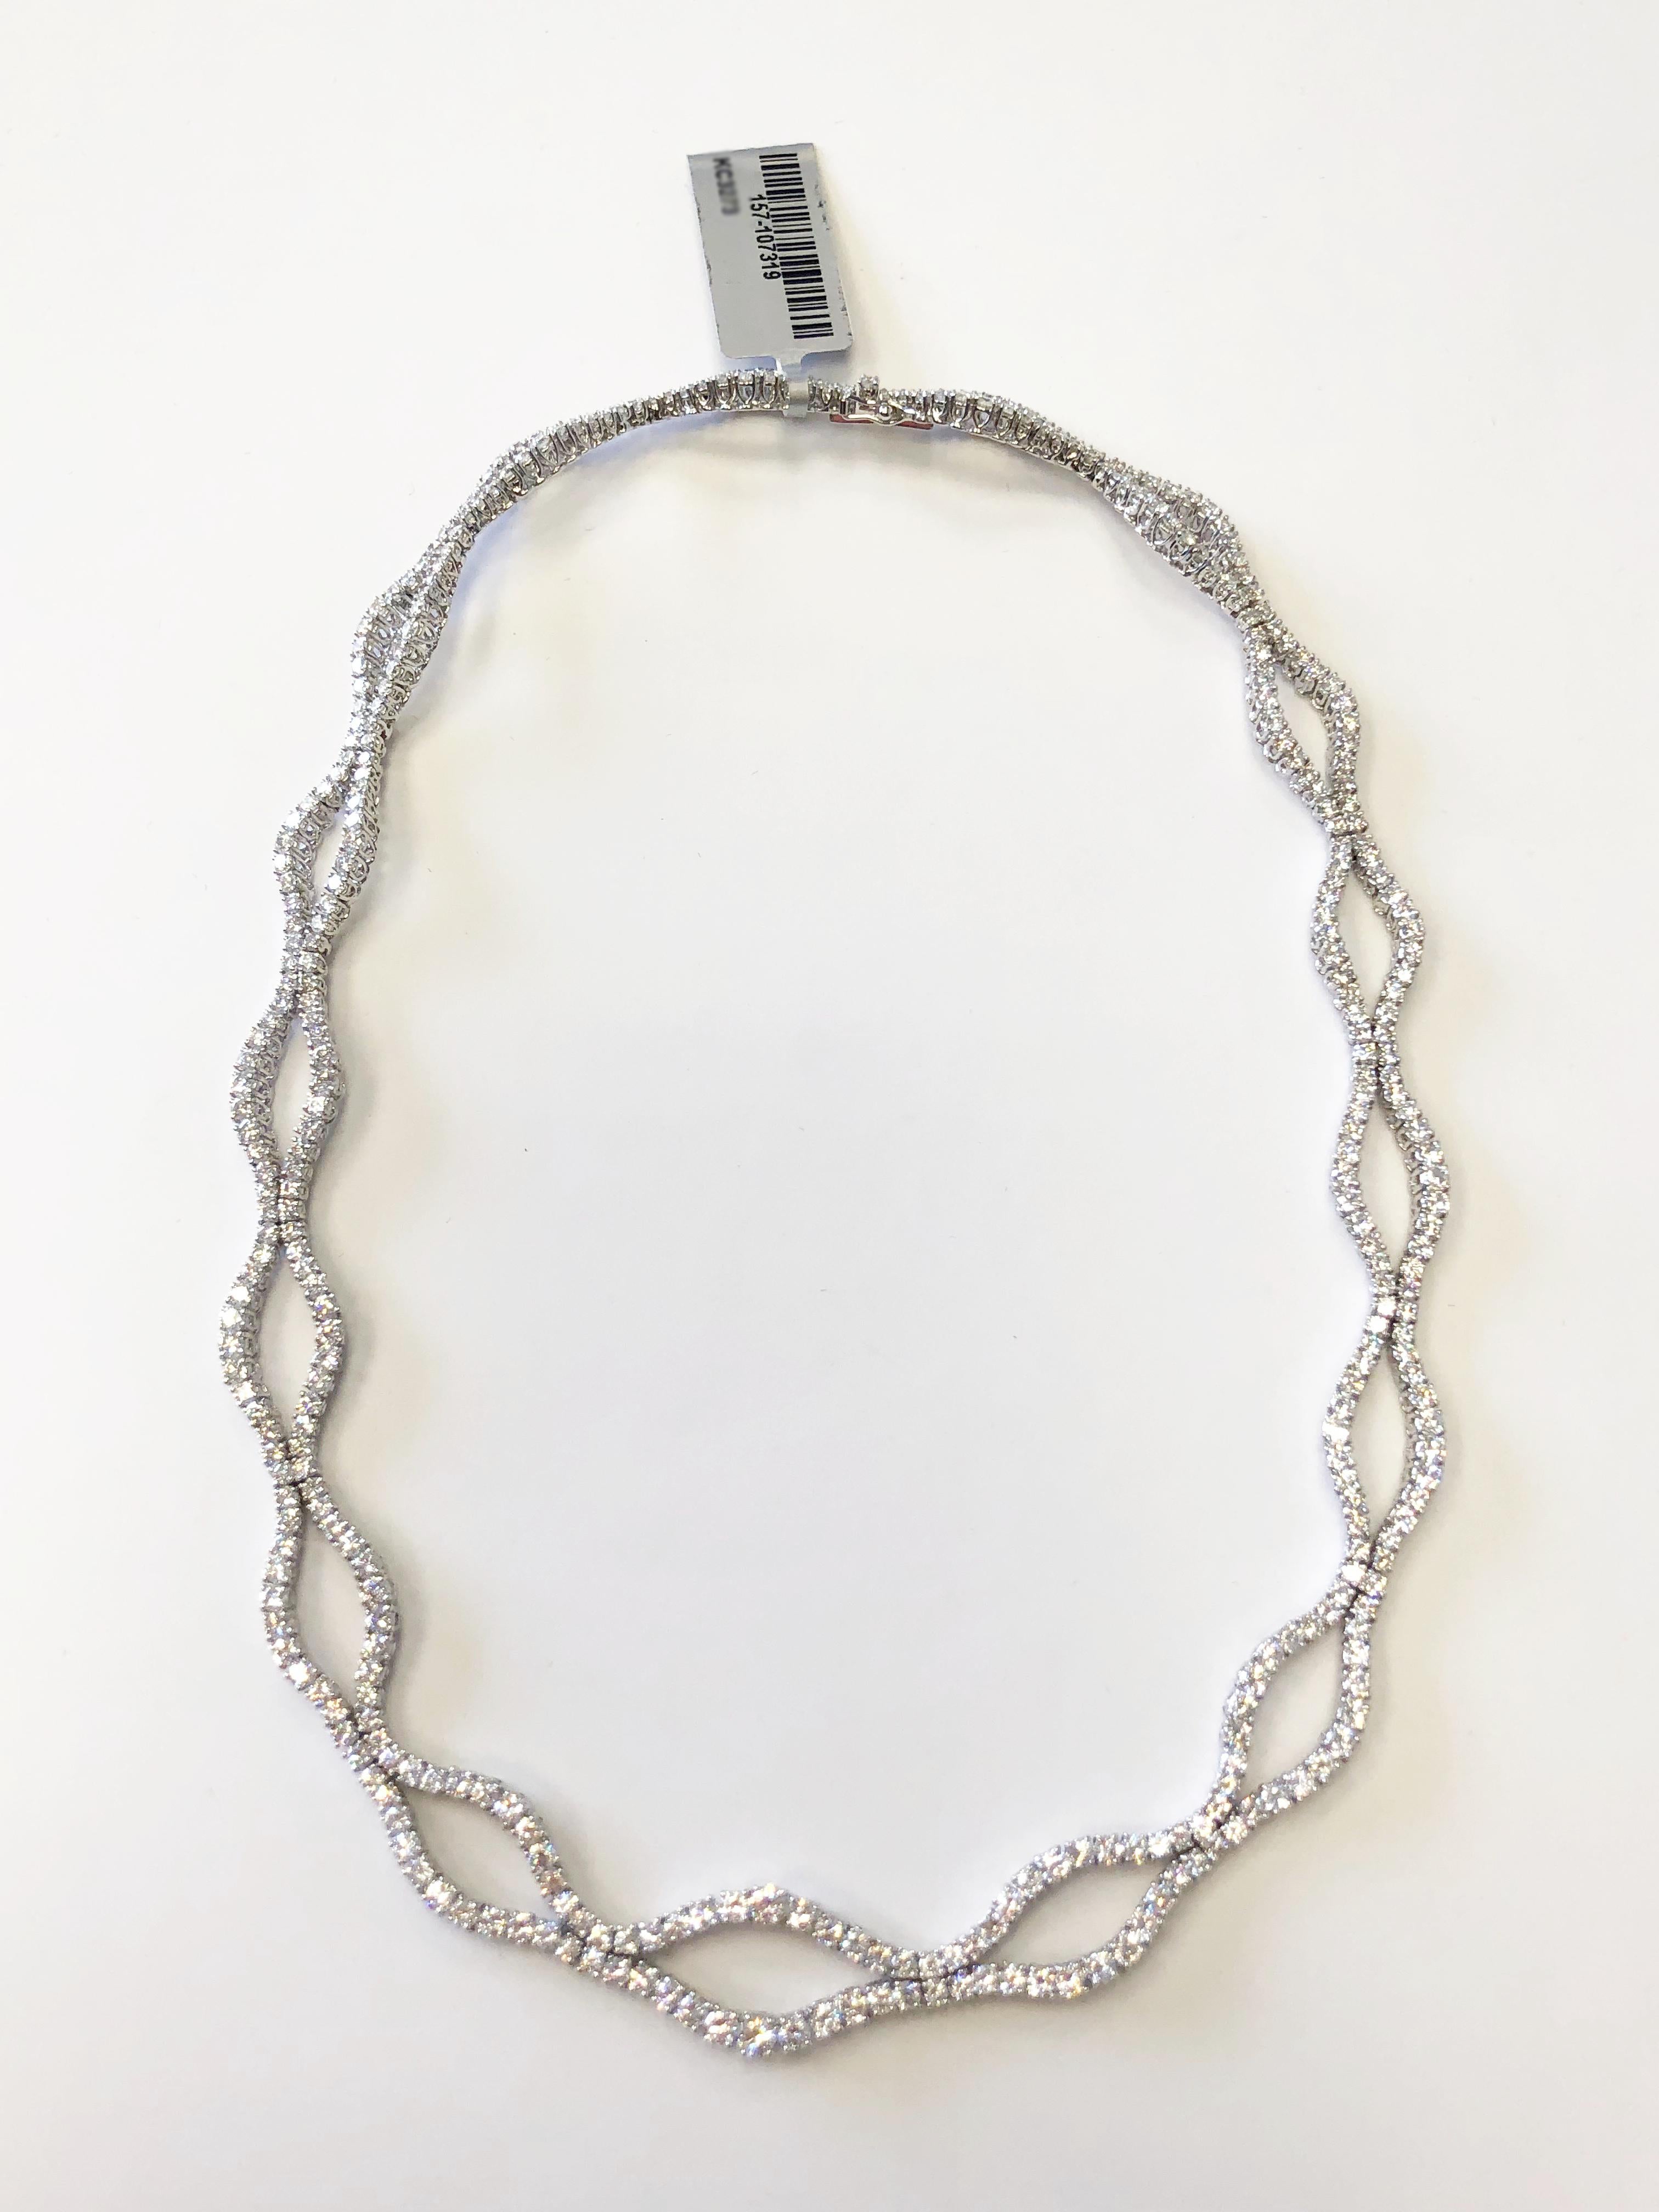 Round Cut White Diamond Round Necklace and Bracelet Set in Platinum